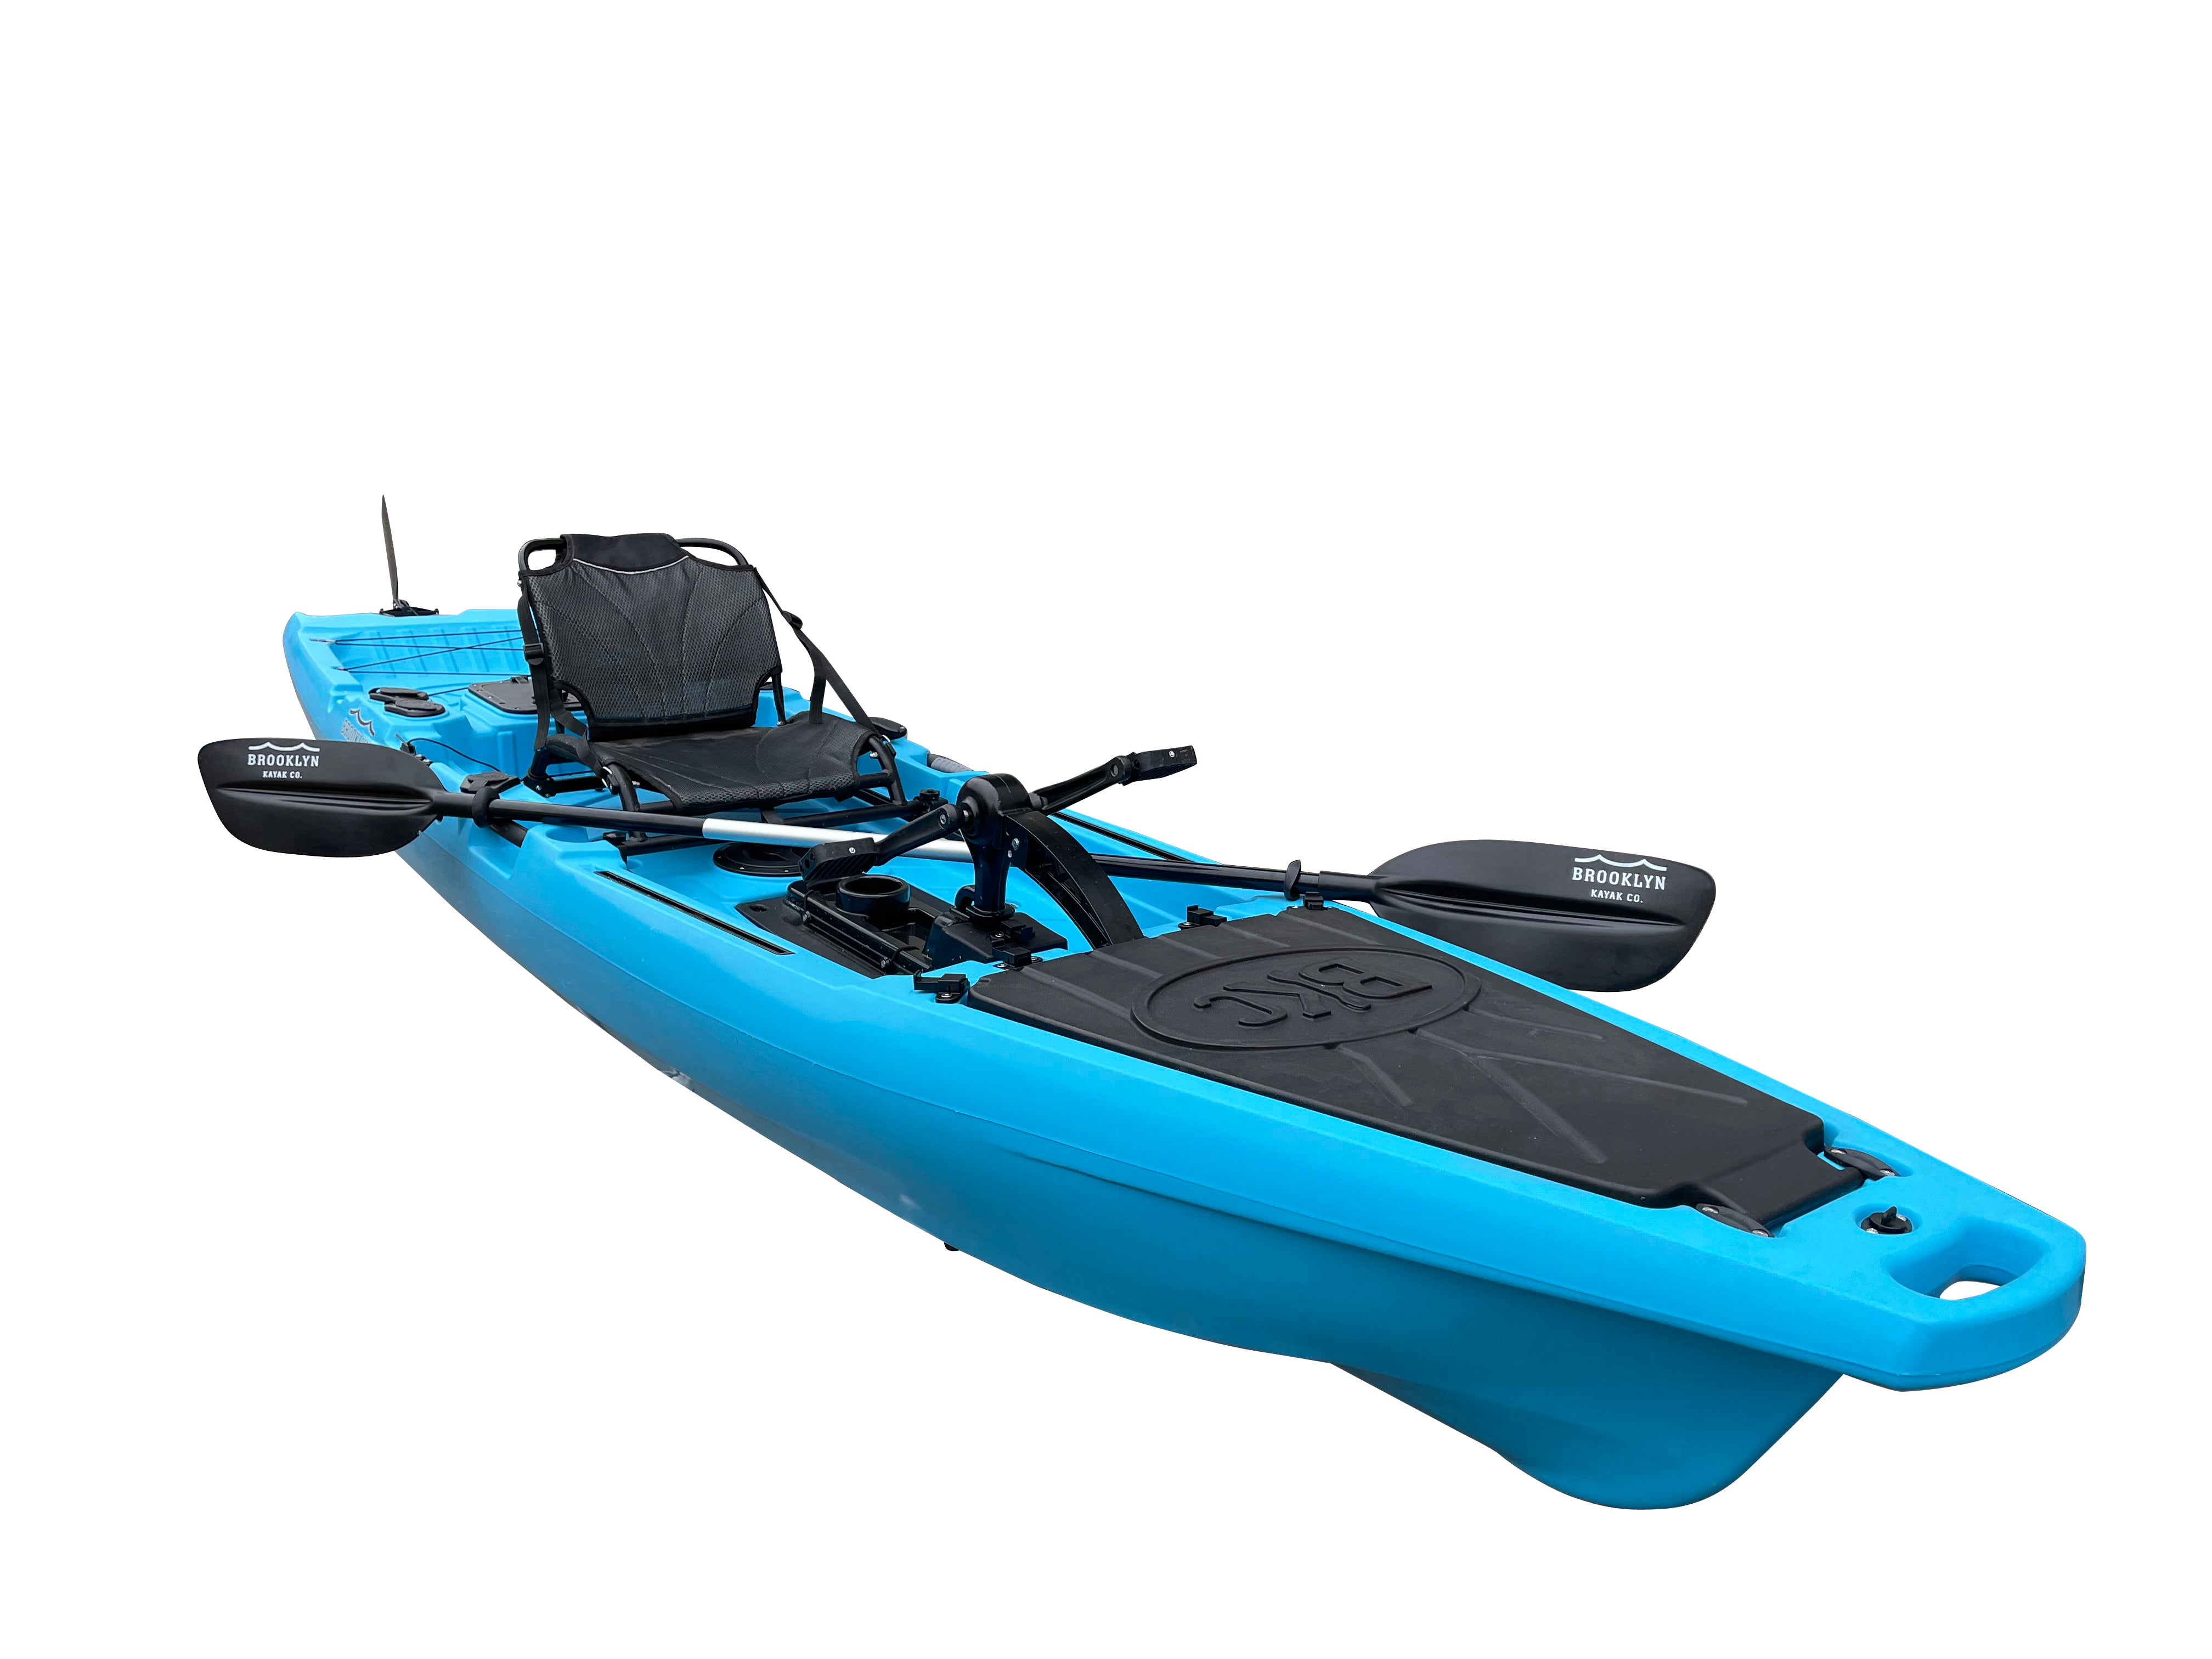 BKC UH-PK13 Pedal Drive Solo Traveler 13 Foot Kayak - Pedal Propeller Drive Single Sit On Top Fishing Kayak with Rudder Control, Blue